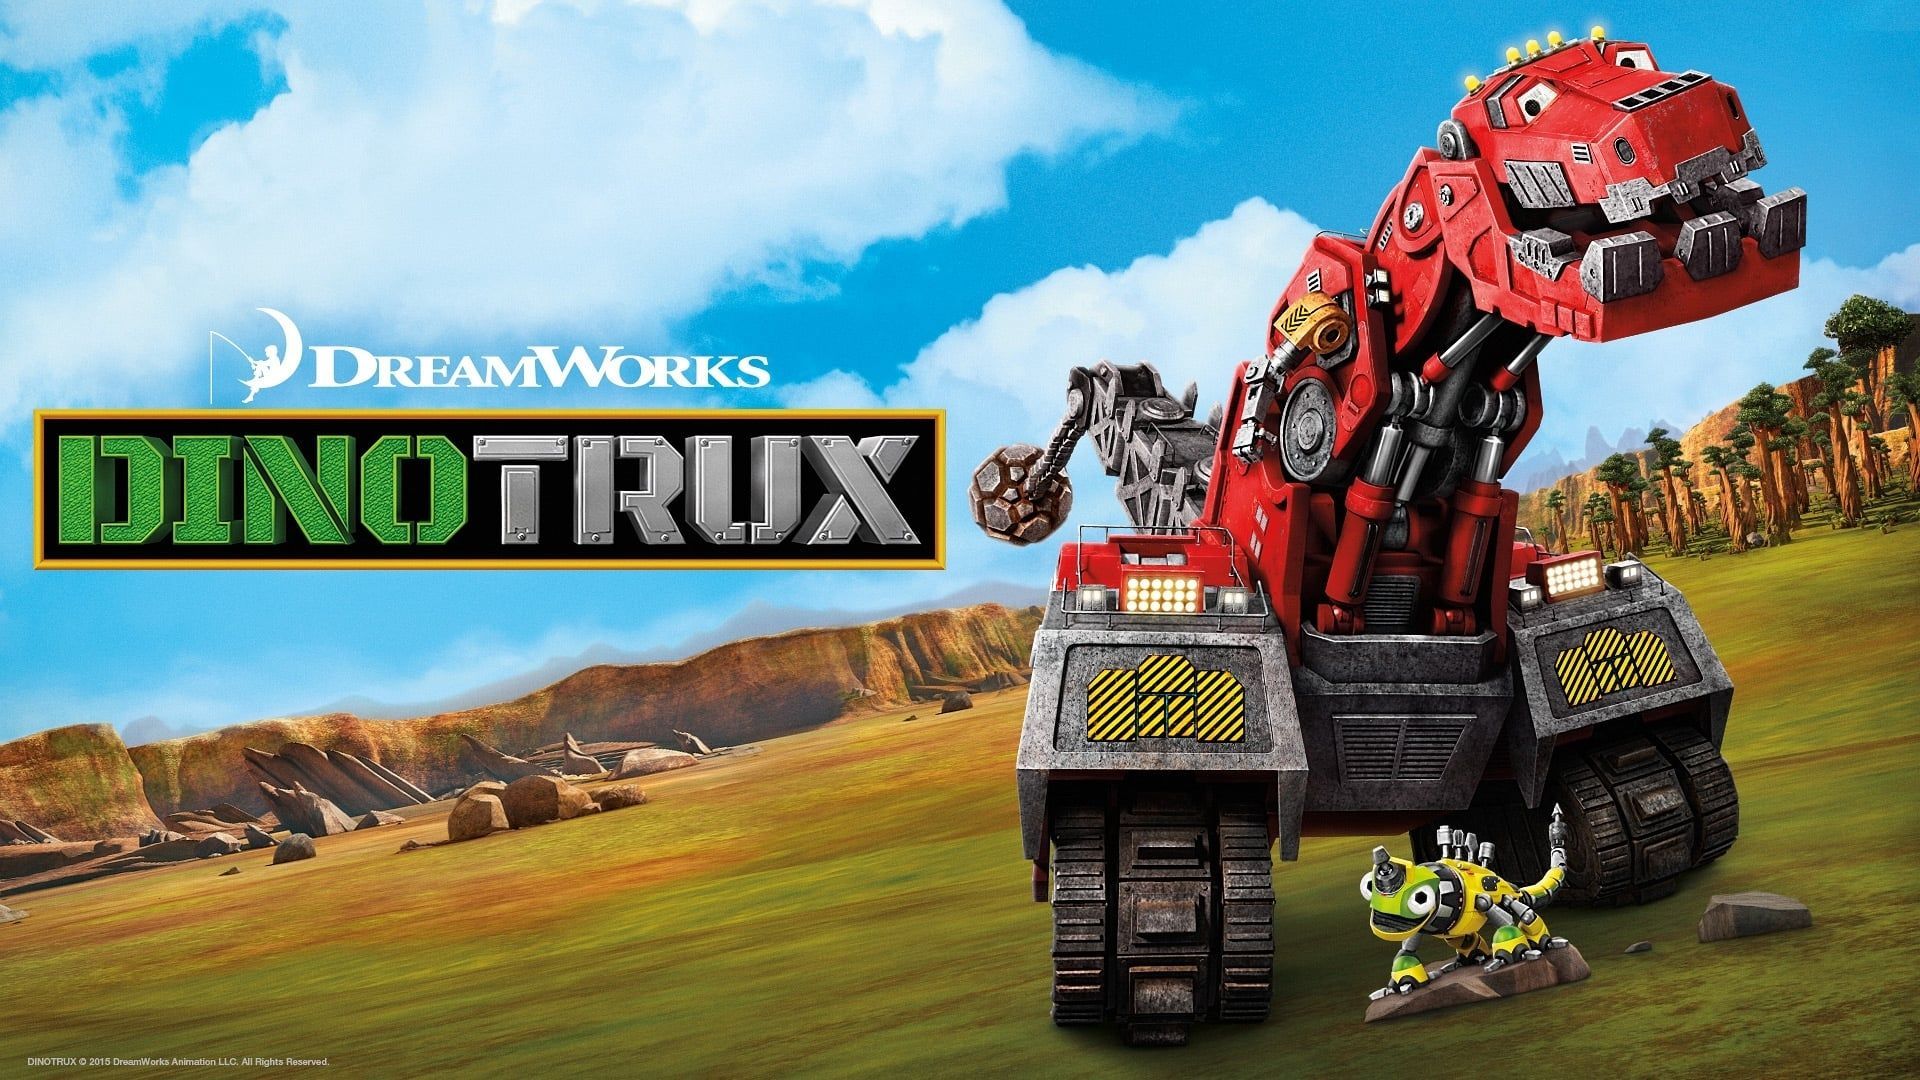 Dinotrux Episodes on Netflix, fuboTV, and Streaming Online